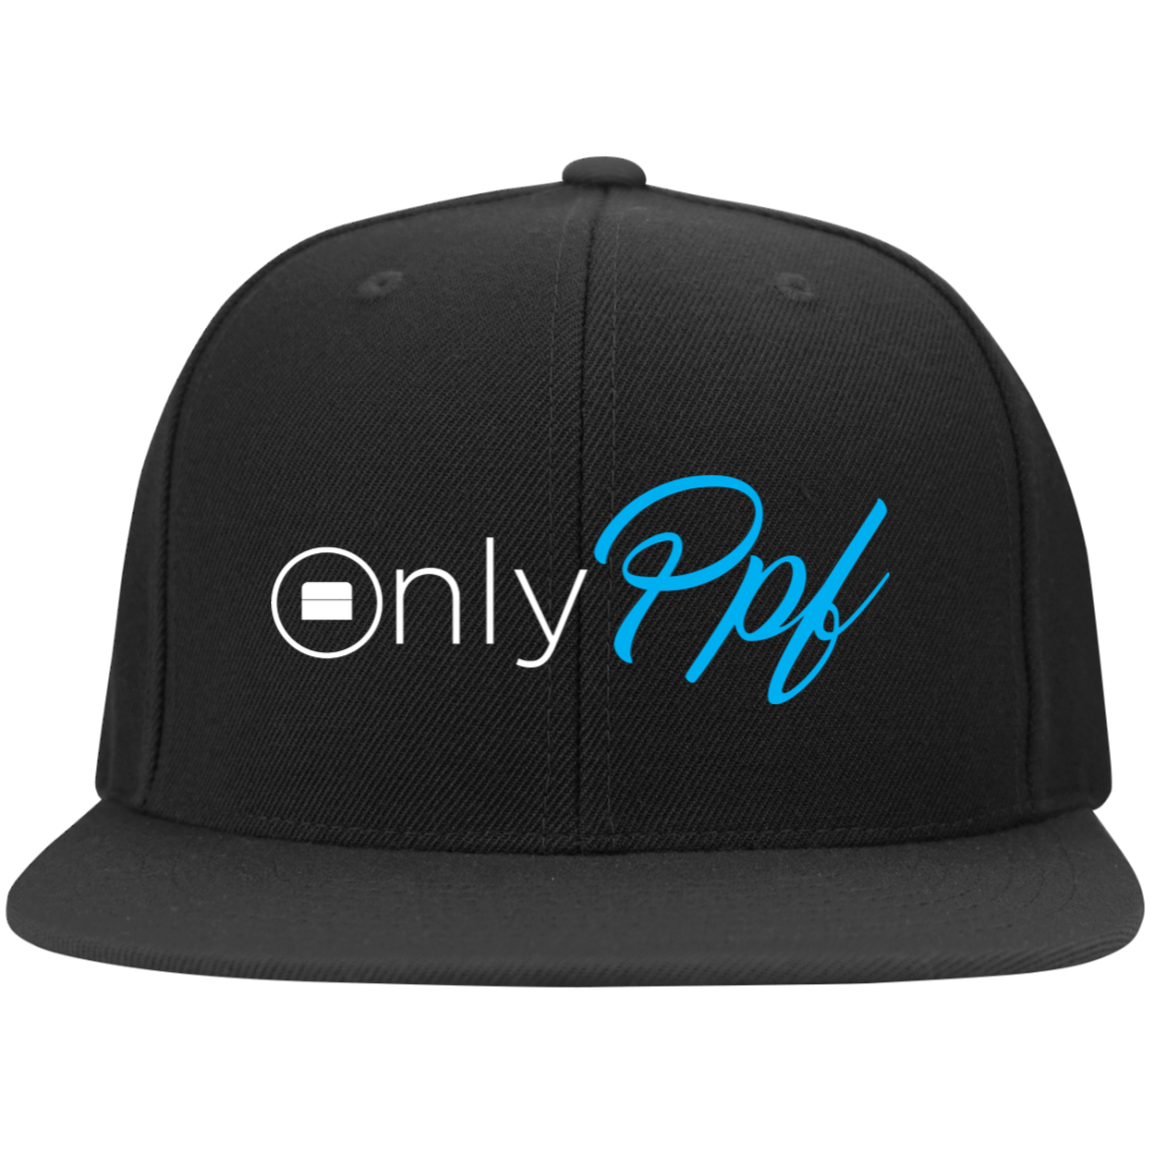 OnlyPPF Embroidered Flat Bill Twill Flexfit Cap